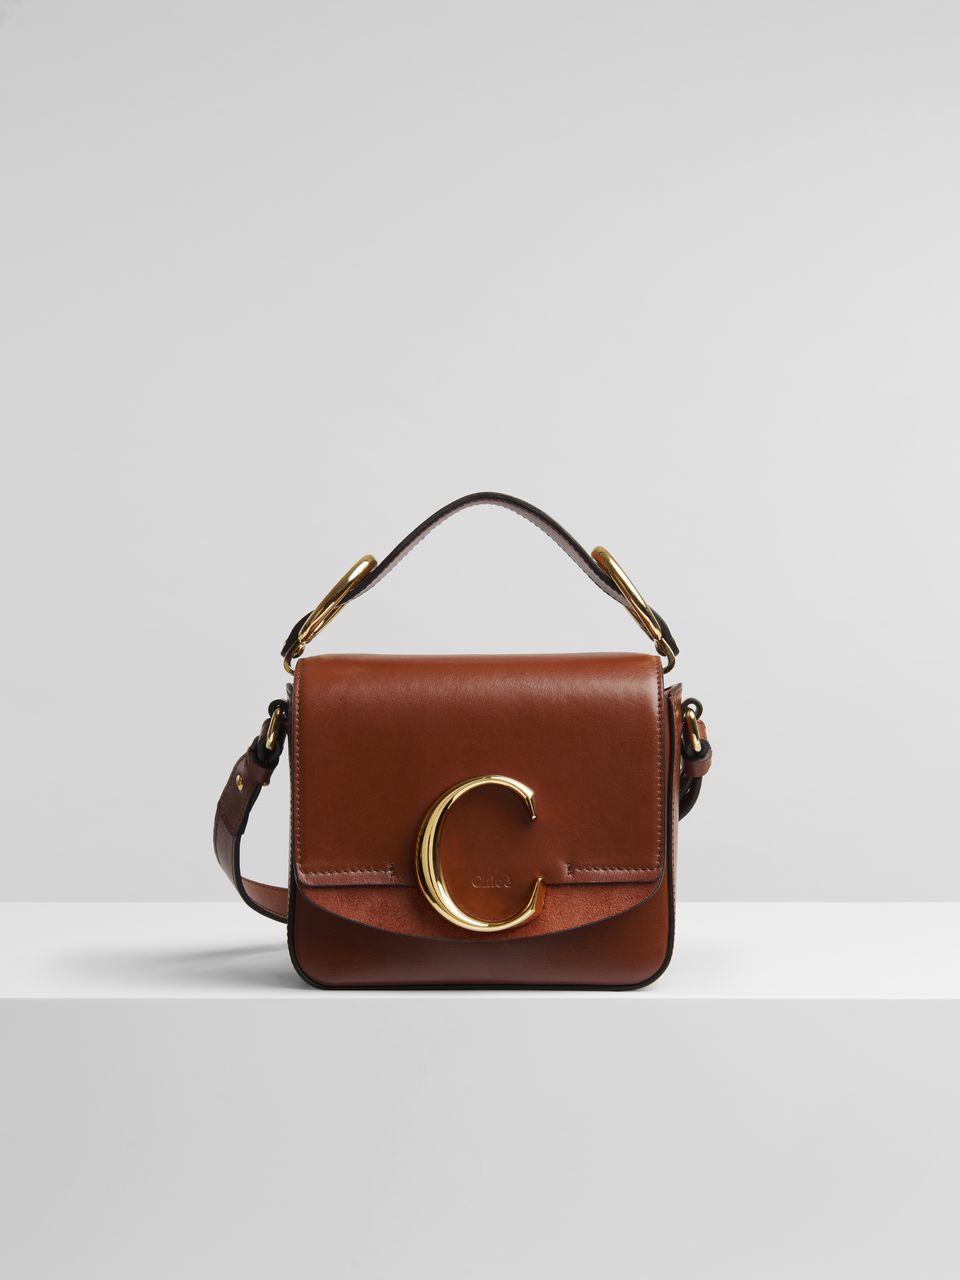 Chloe's Spring 2019 Bags Double Down on the Brand's New C Logo Hardware -  PurseBlog